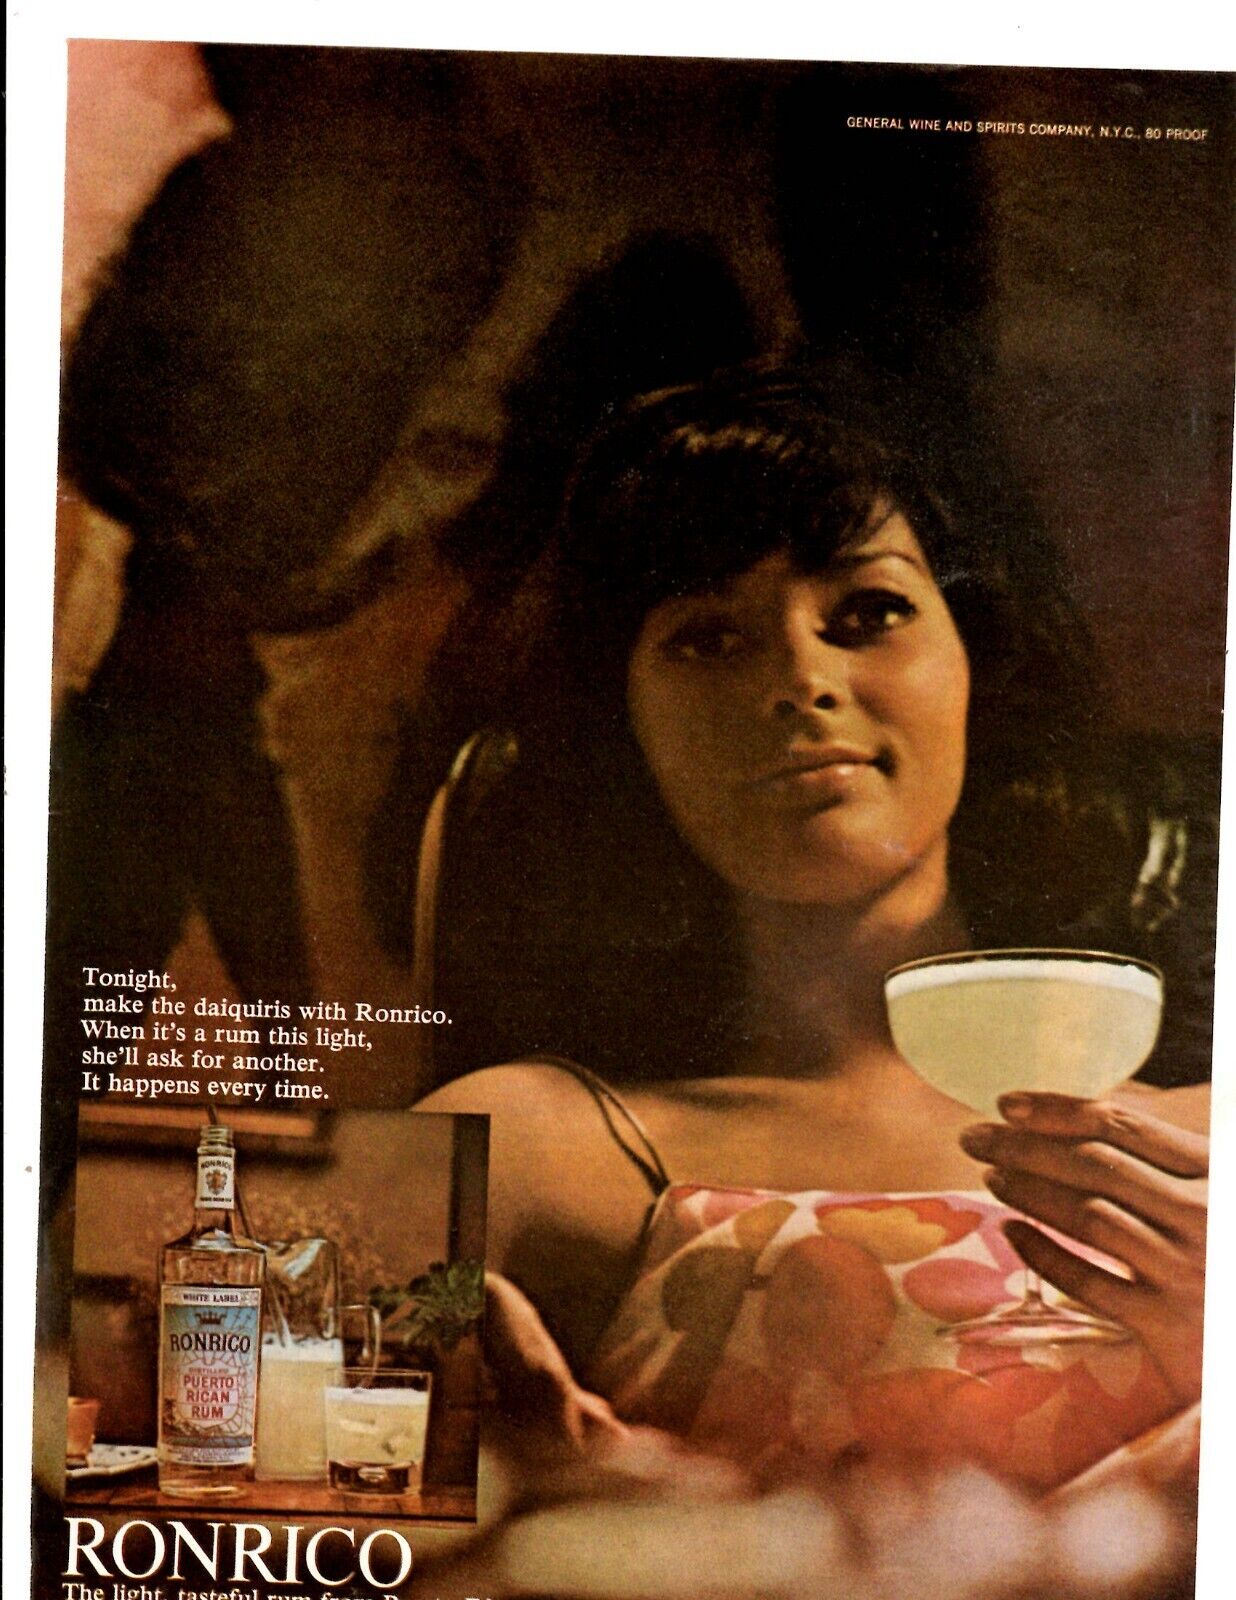 1967 Print Ad Ronrico Rum from Puerto Rico Tonight make the daiquiris this light